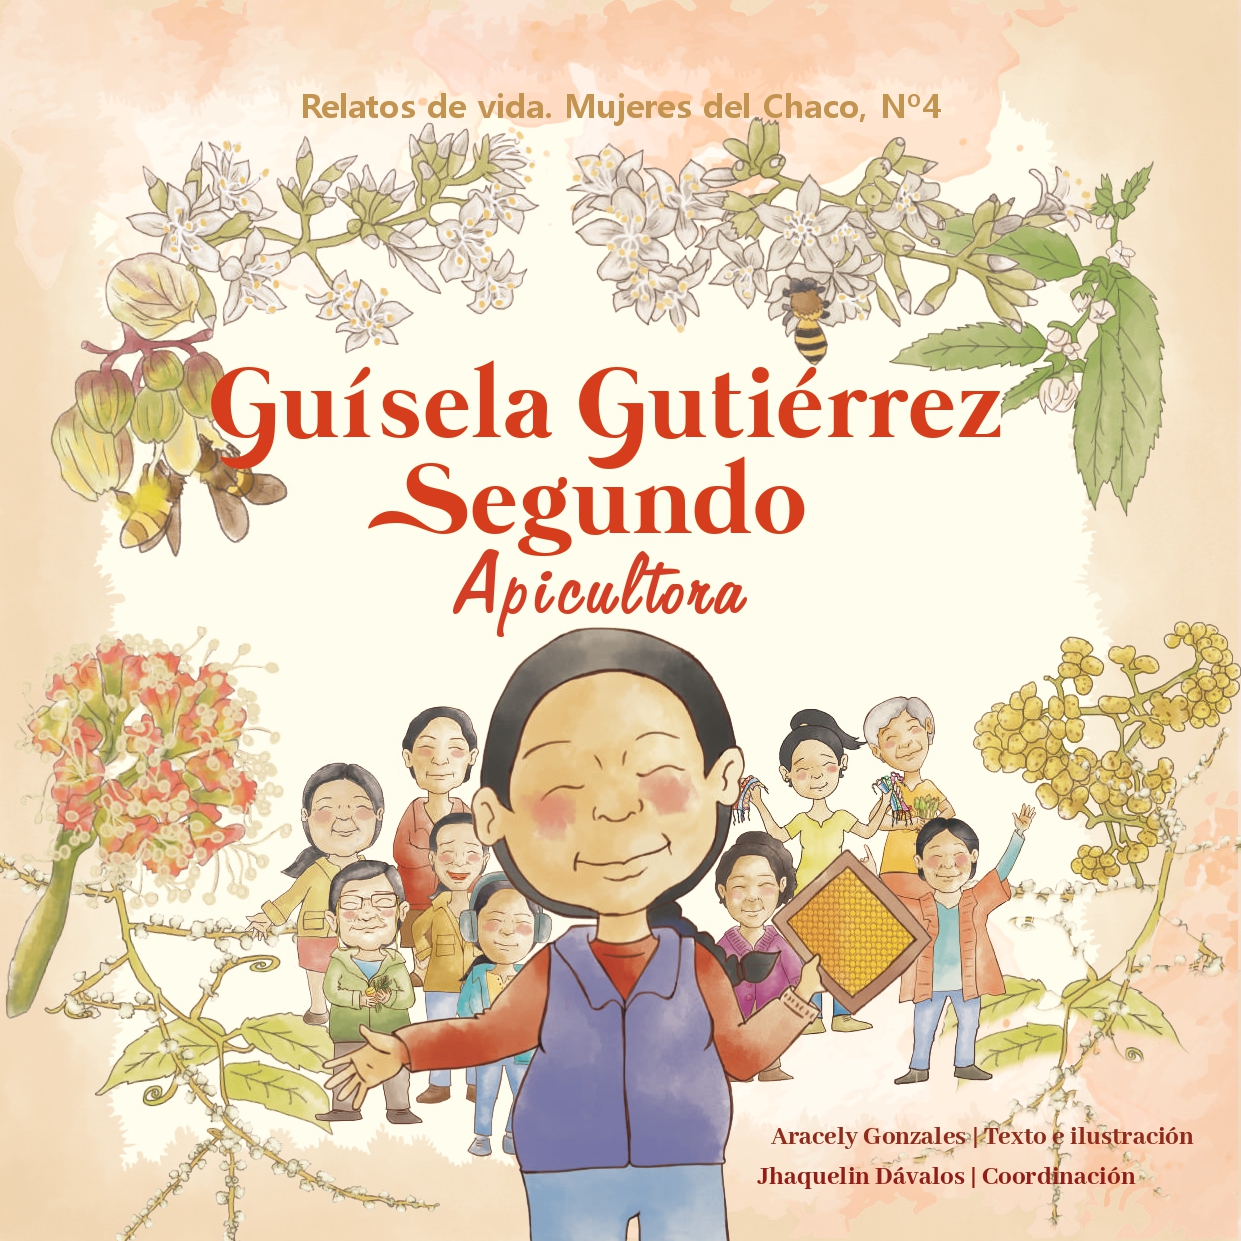 Guísela Gutiérrez Segundo, apicultora